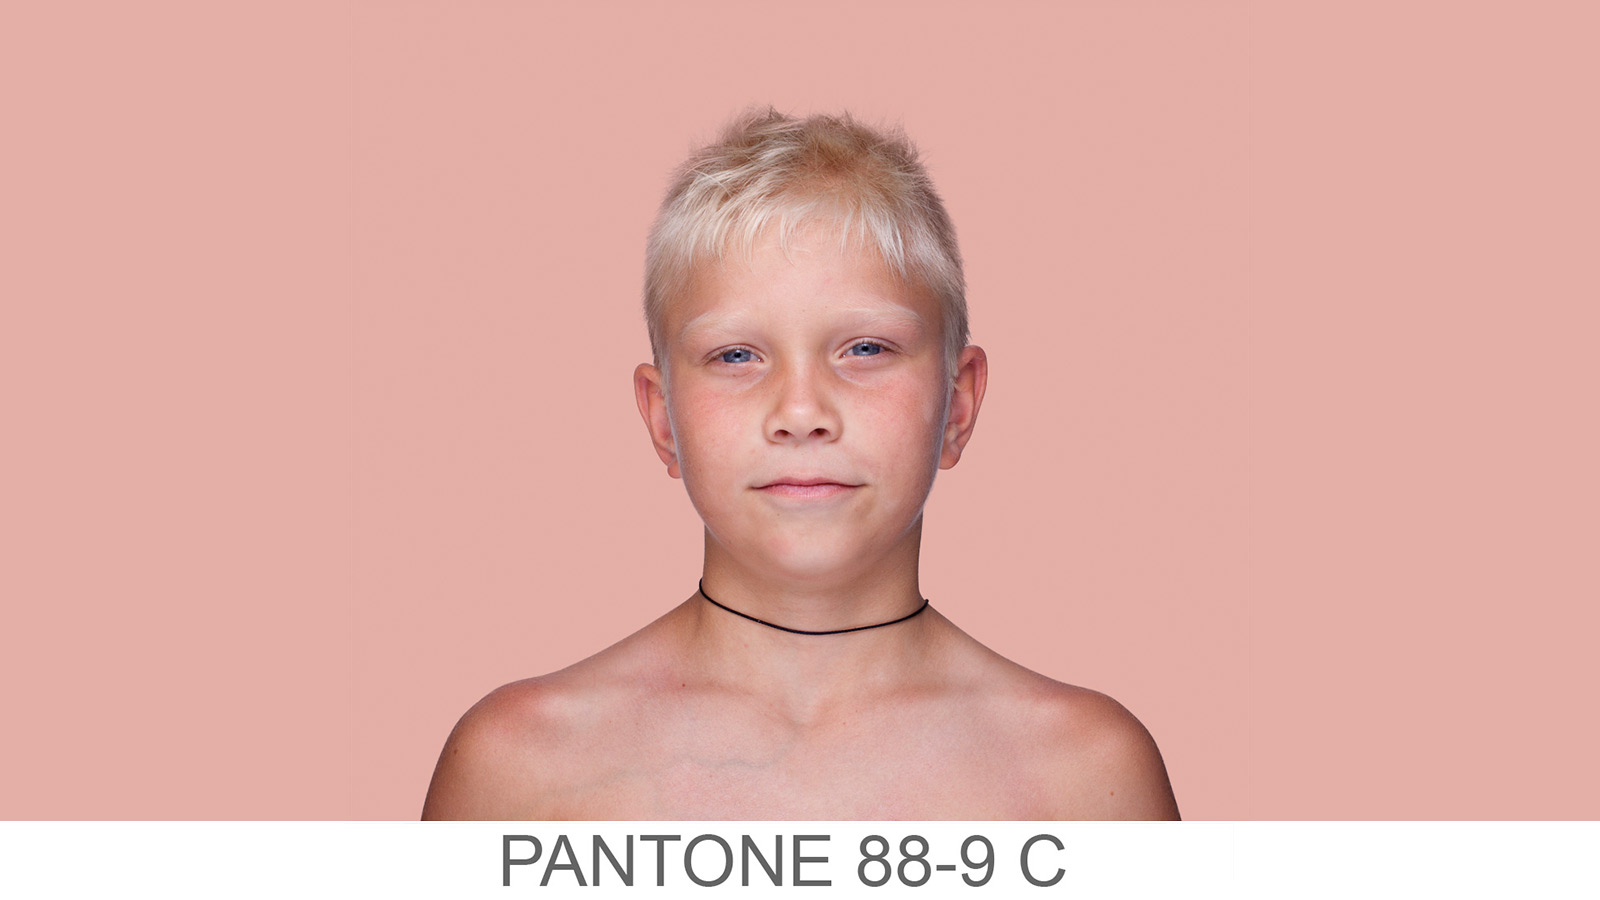 angelica-dass-humanae-pantone-series-6-boy